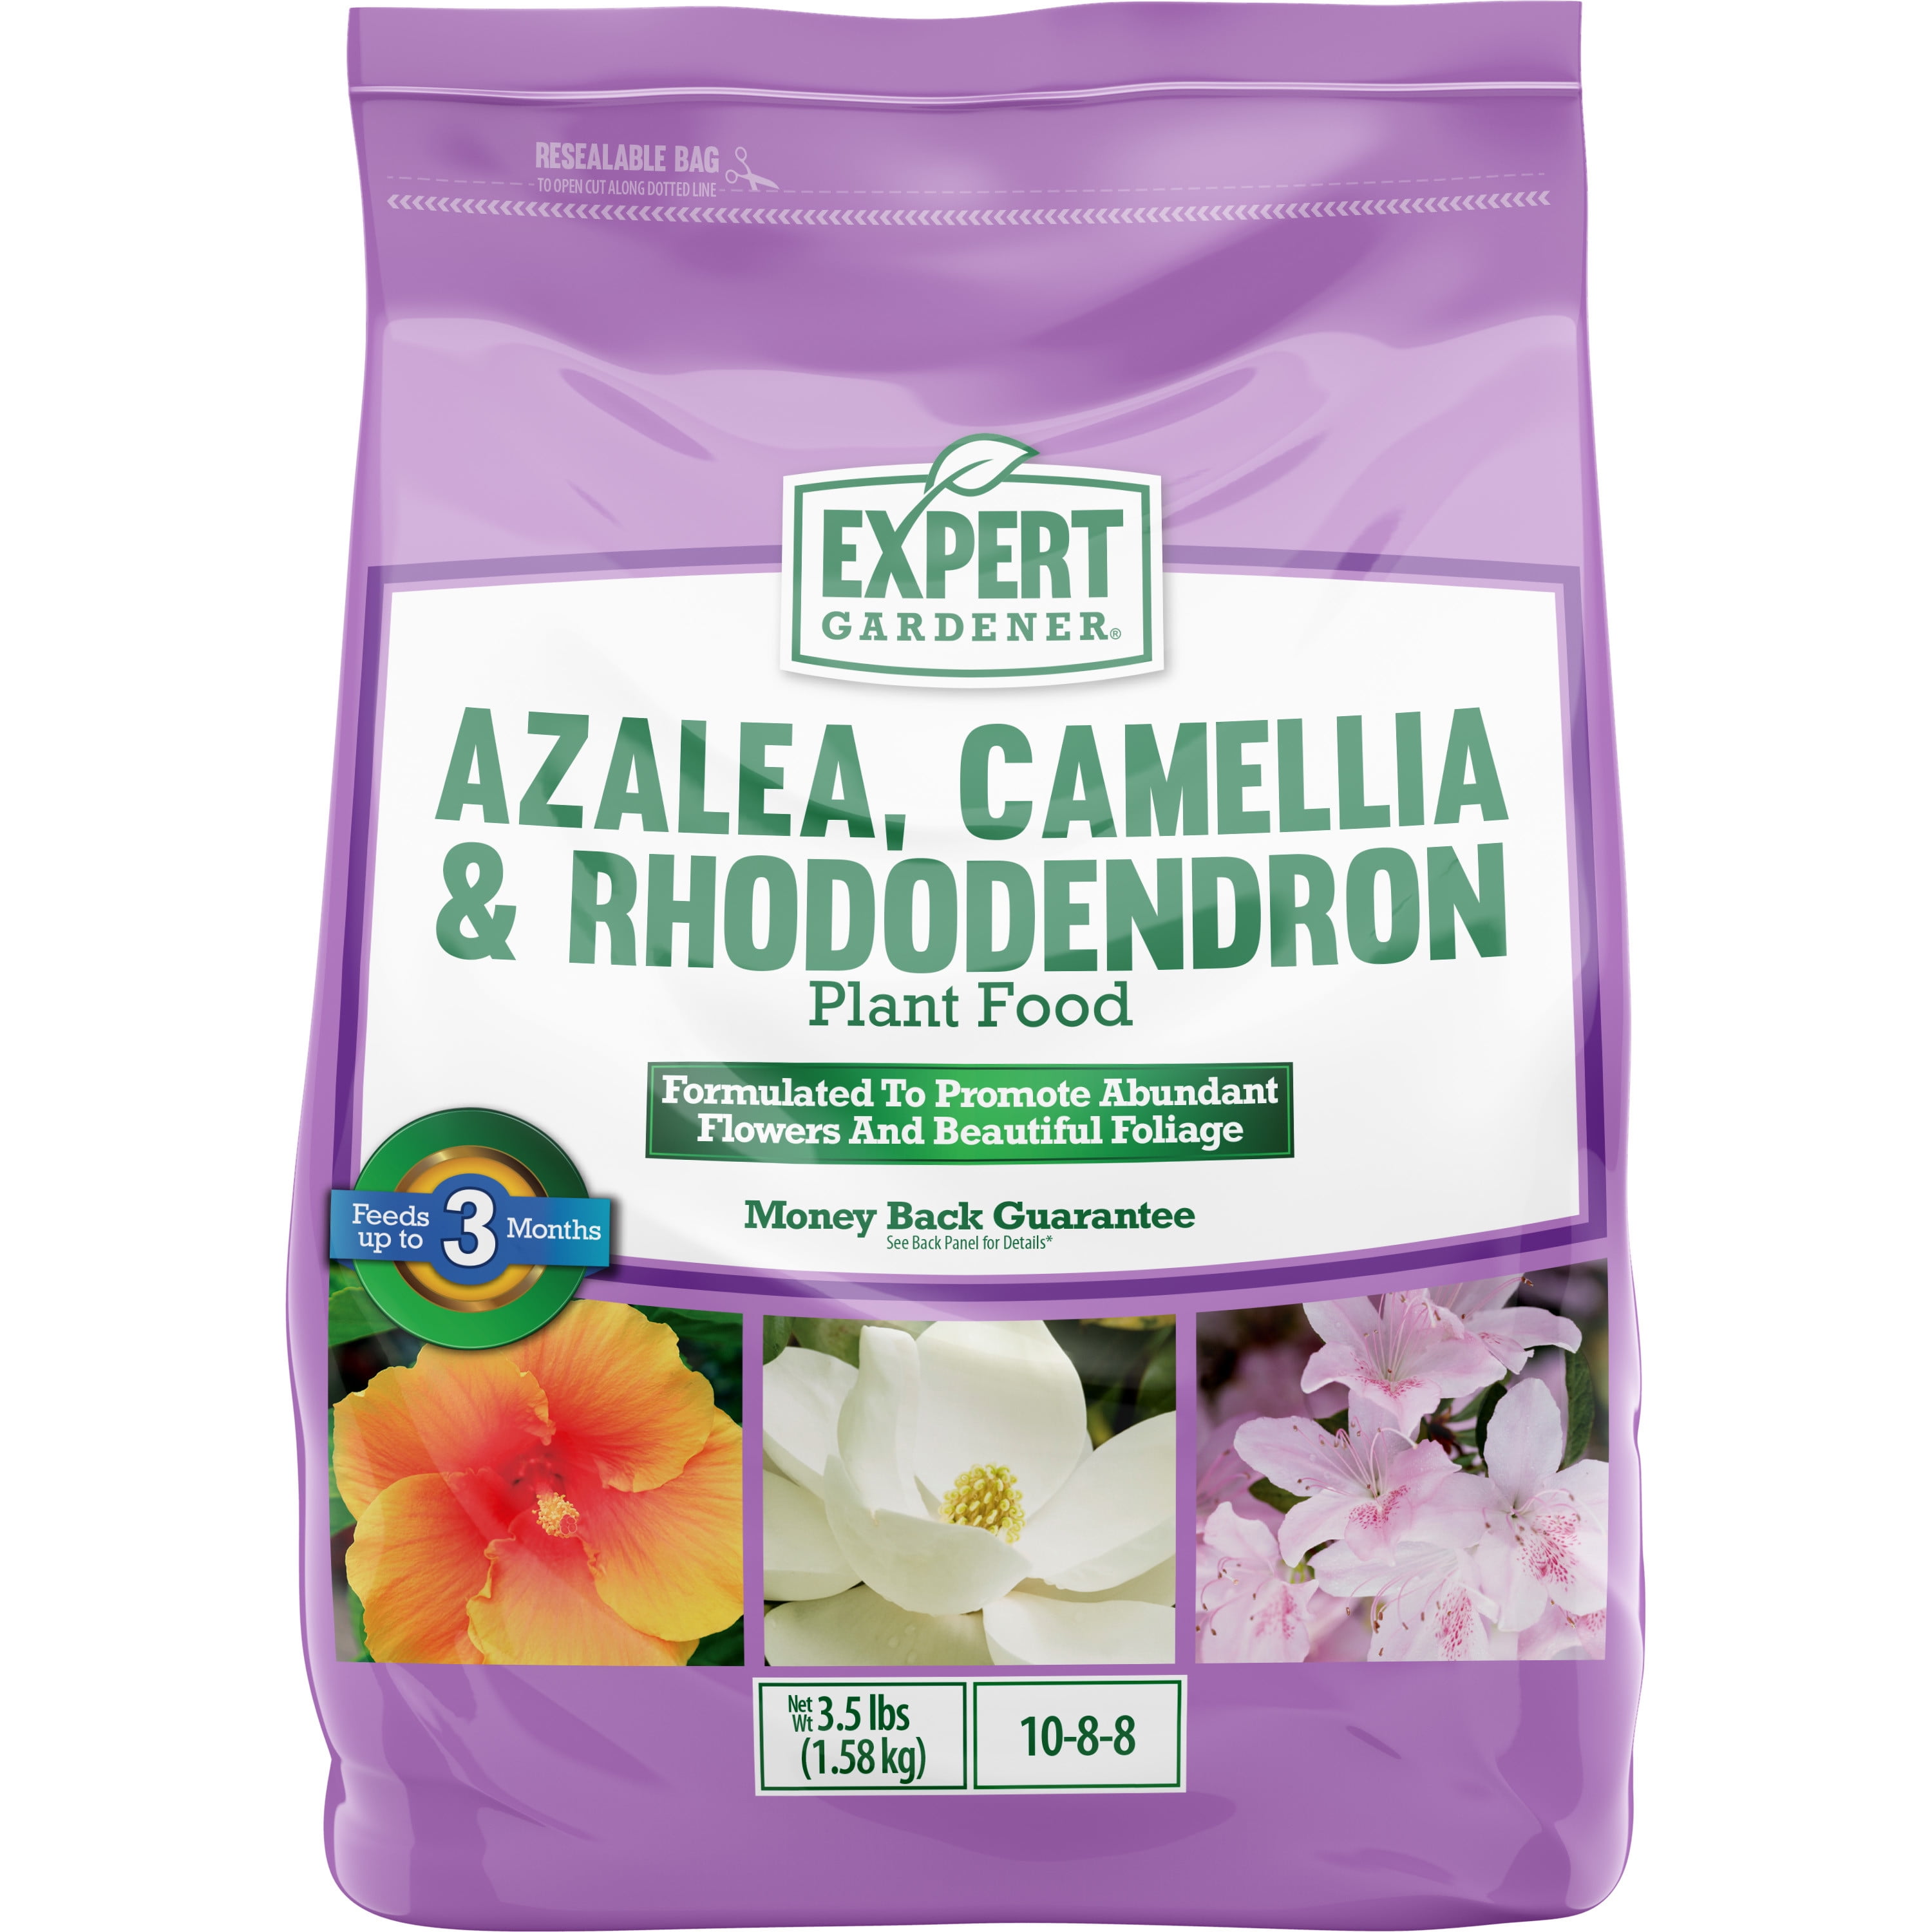 Expert Gardener Azalea, Camellia & Rhododendron Plant Food Fertilizer 10-8-8, 3 lb.